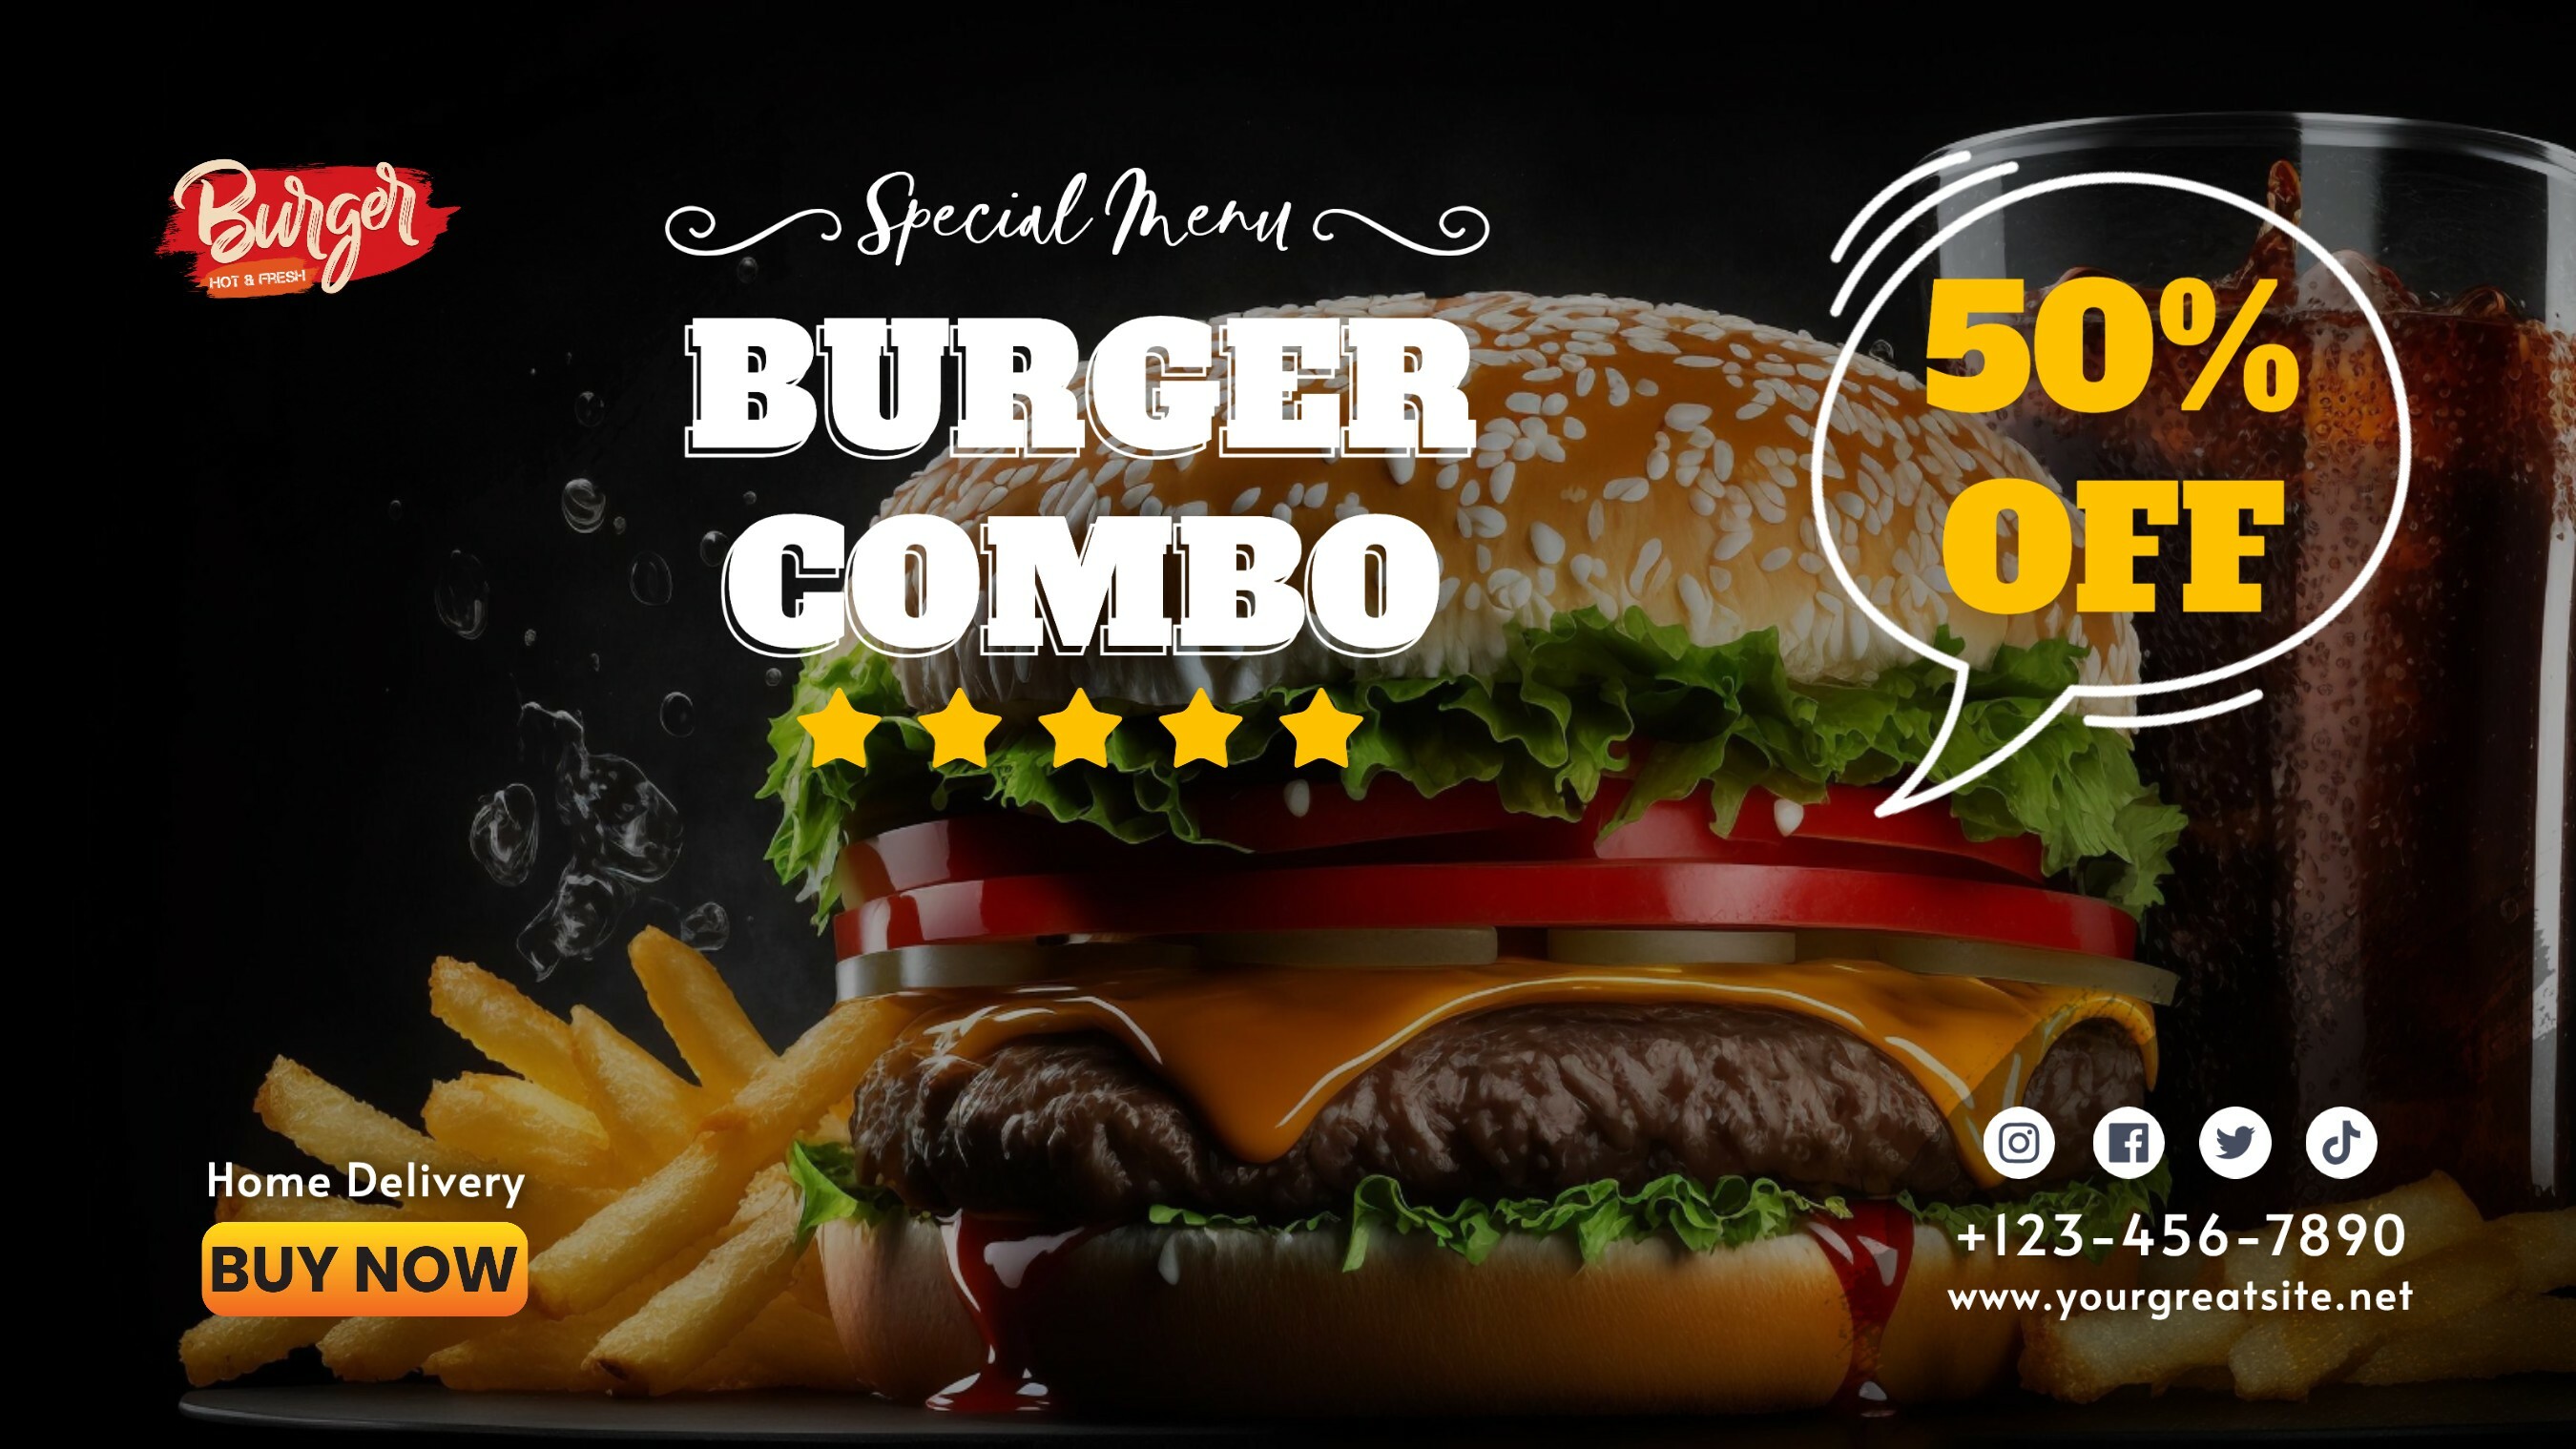 Burger Menu And Promo Set for Twitter